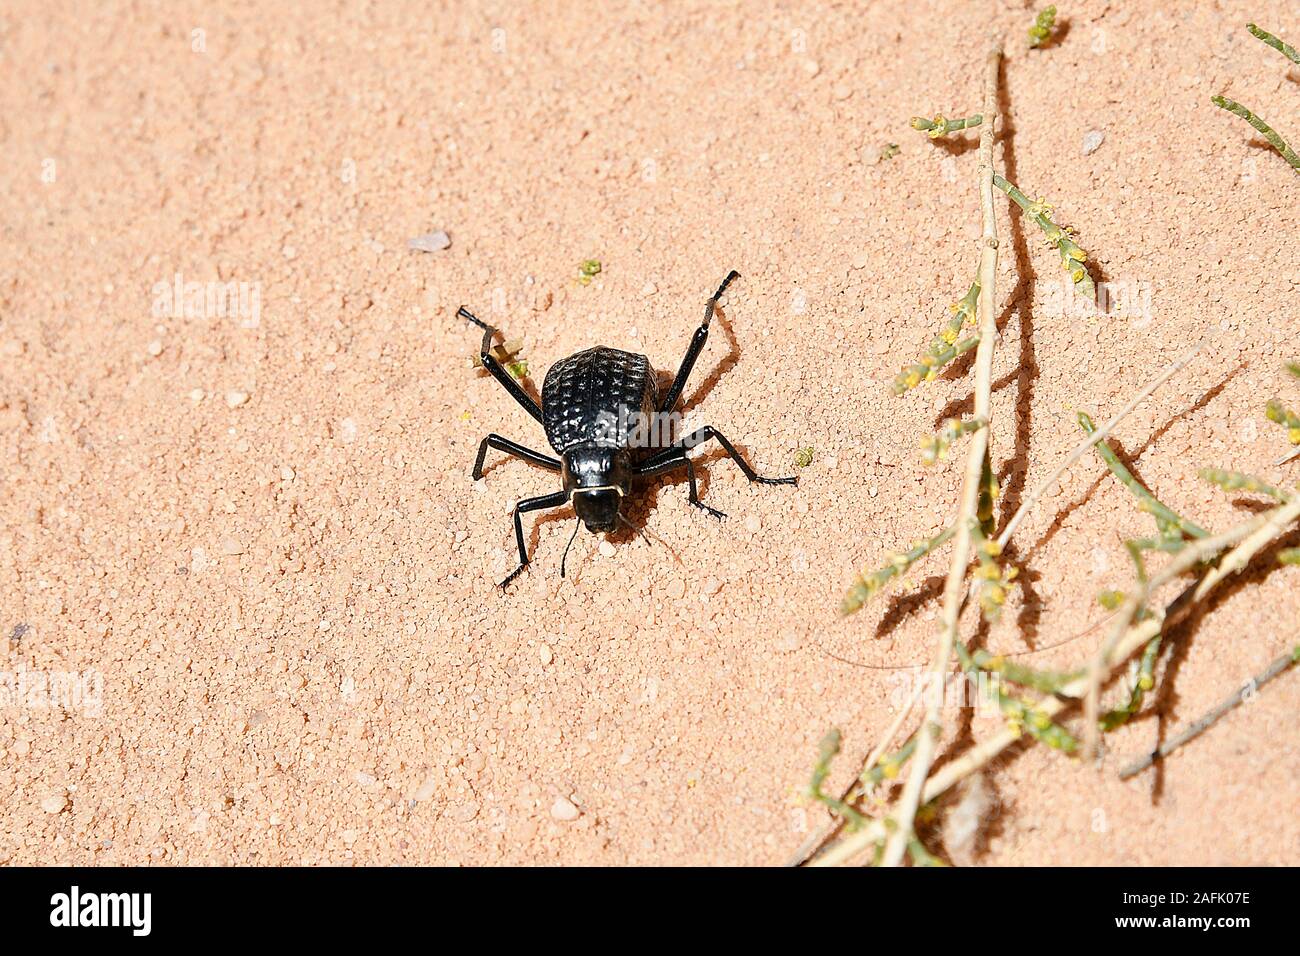 Jordan, darkling beetle in desert of Wadi Rum Stock Photo